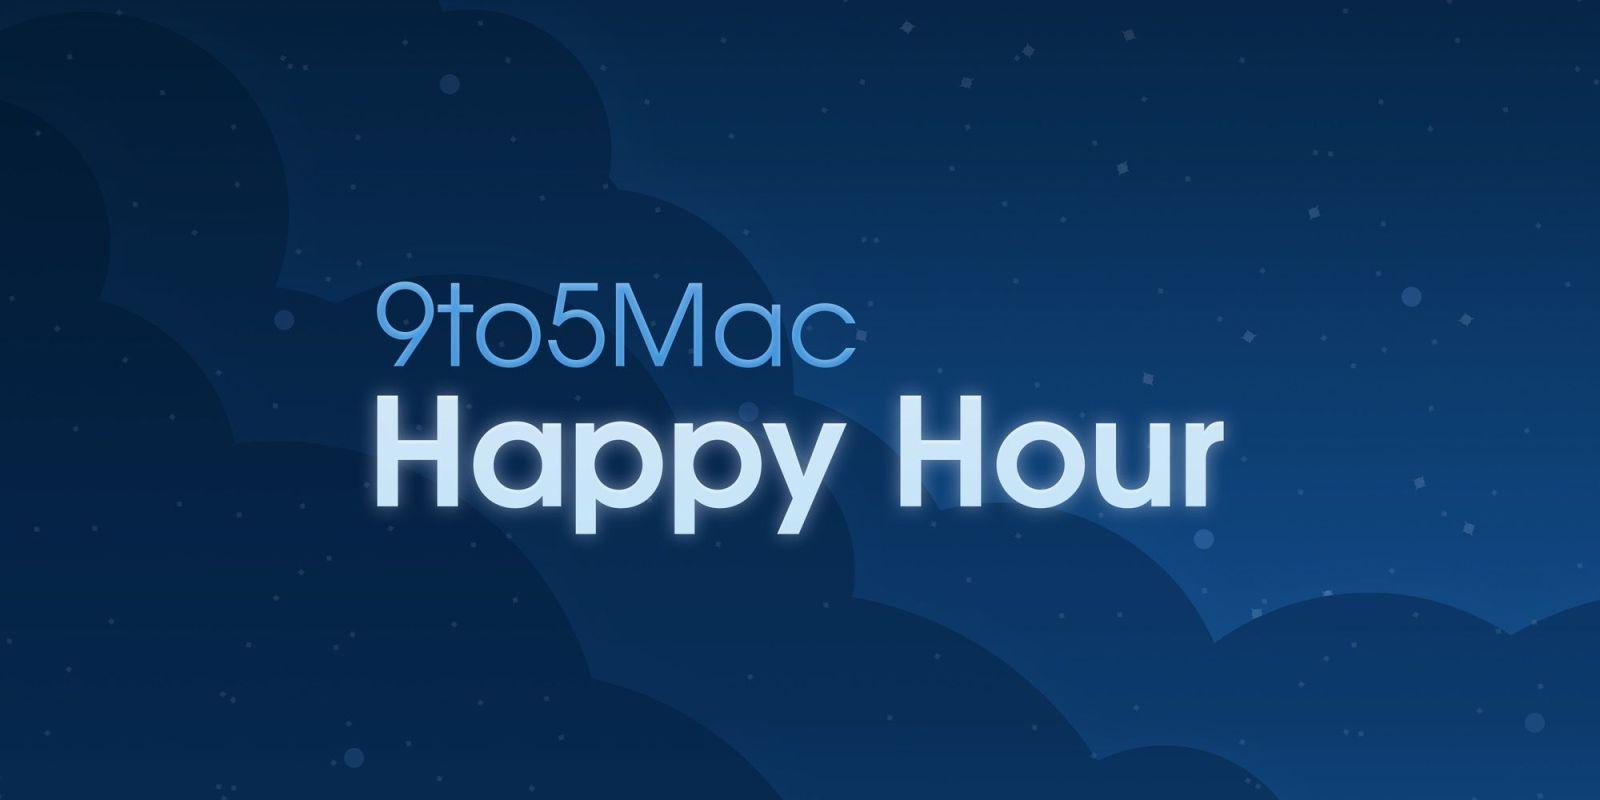 Happy Mac OS Logo - 9to5Mac Happy Hour 182: 2018 MacBook Pro upgrade, thermal throttling